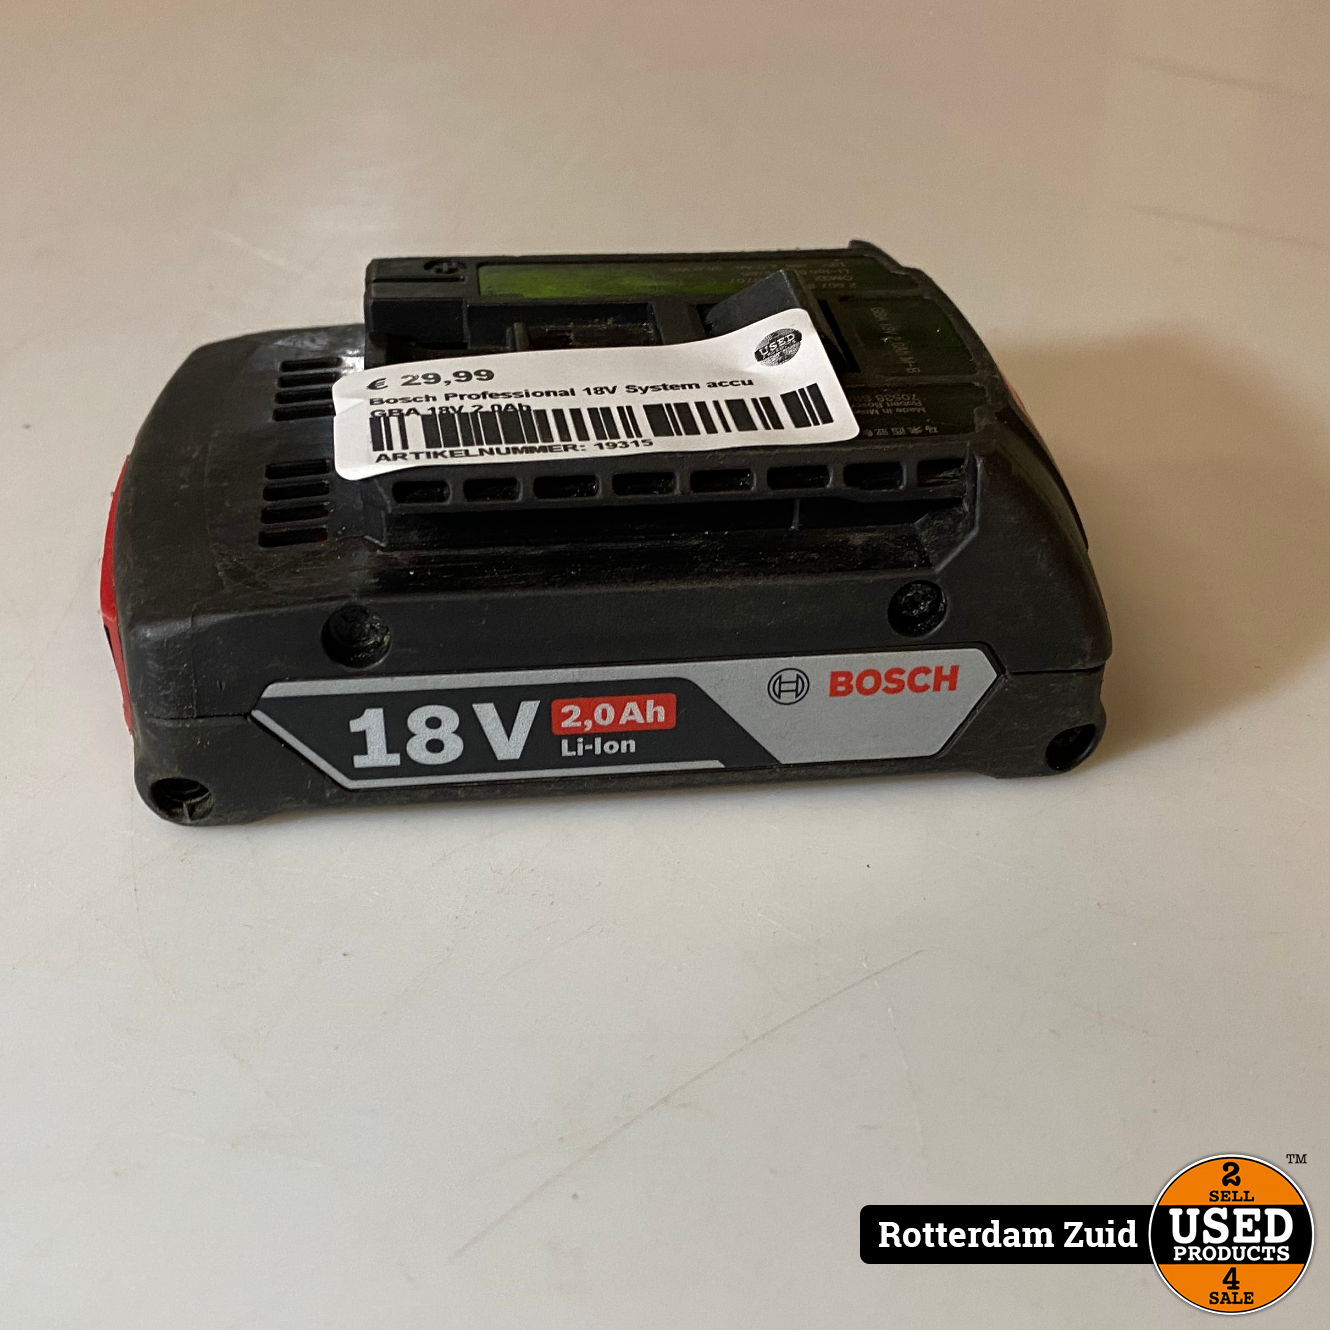 Bosch 18V System accu 18V - Used Products Rotterdam